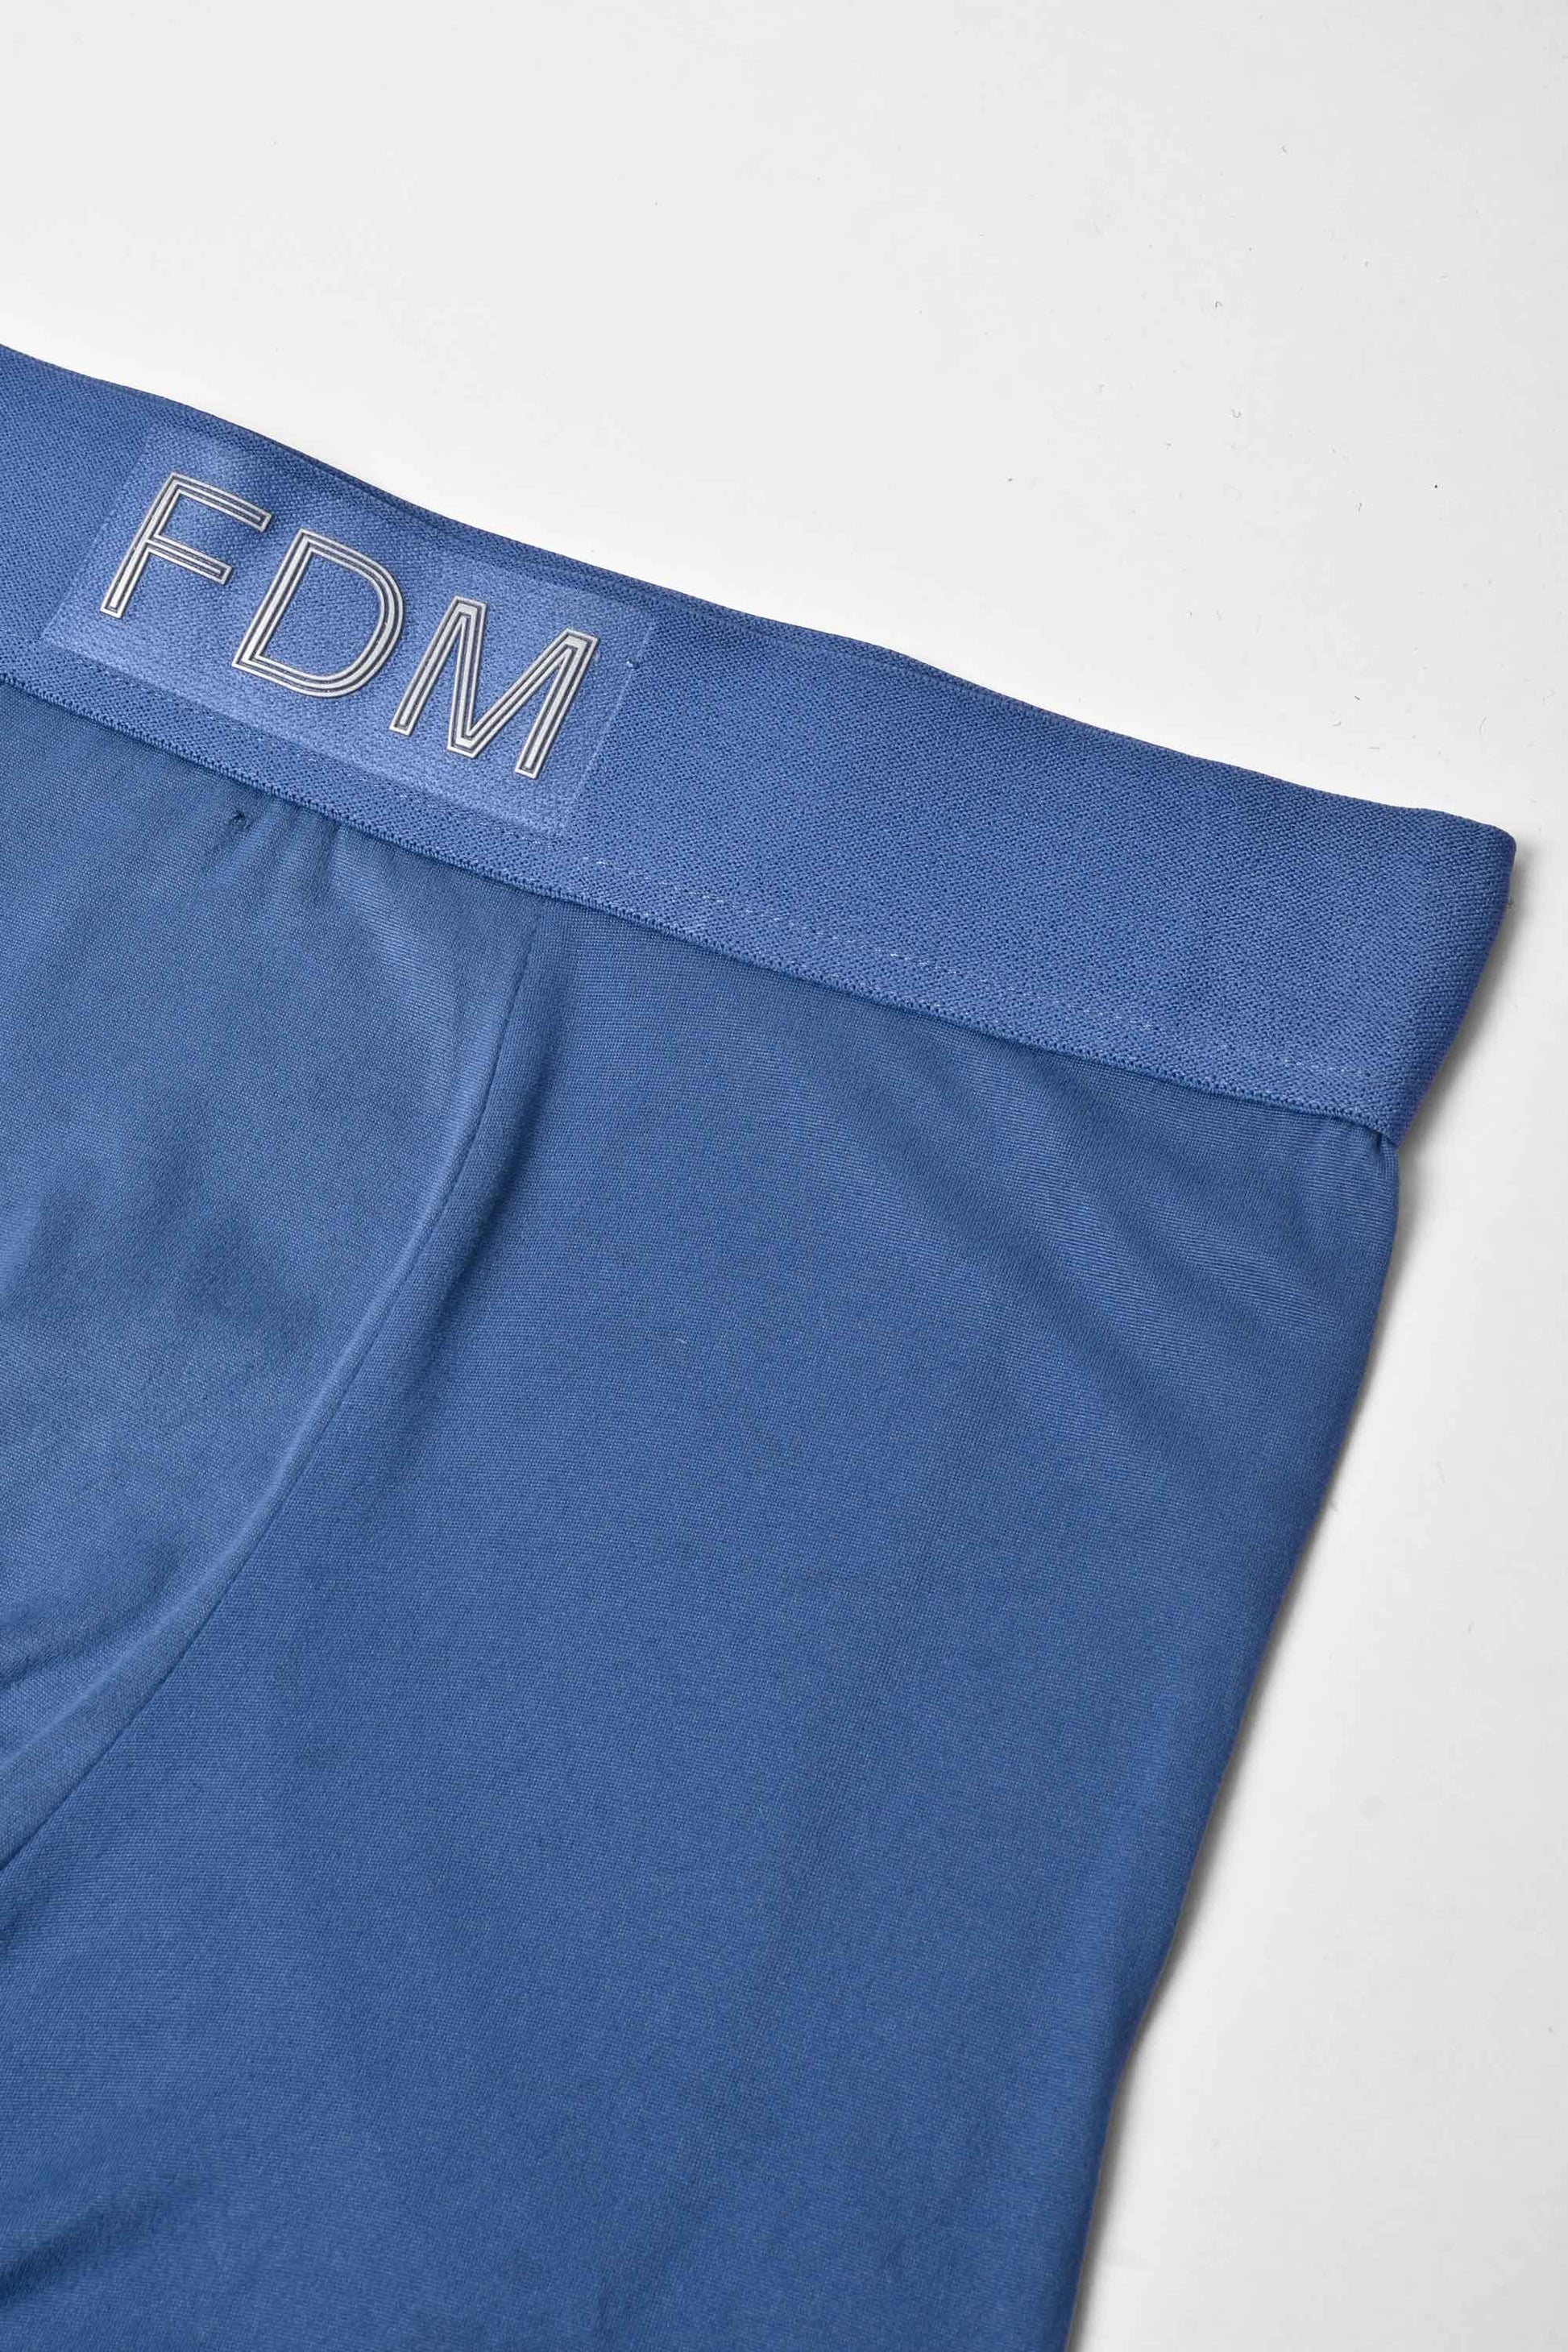 FDM Men's Stretched Comfort Boxer Underwear